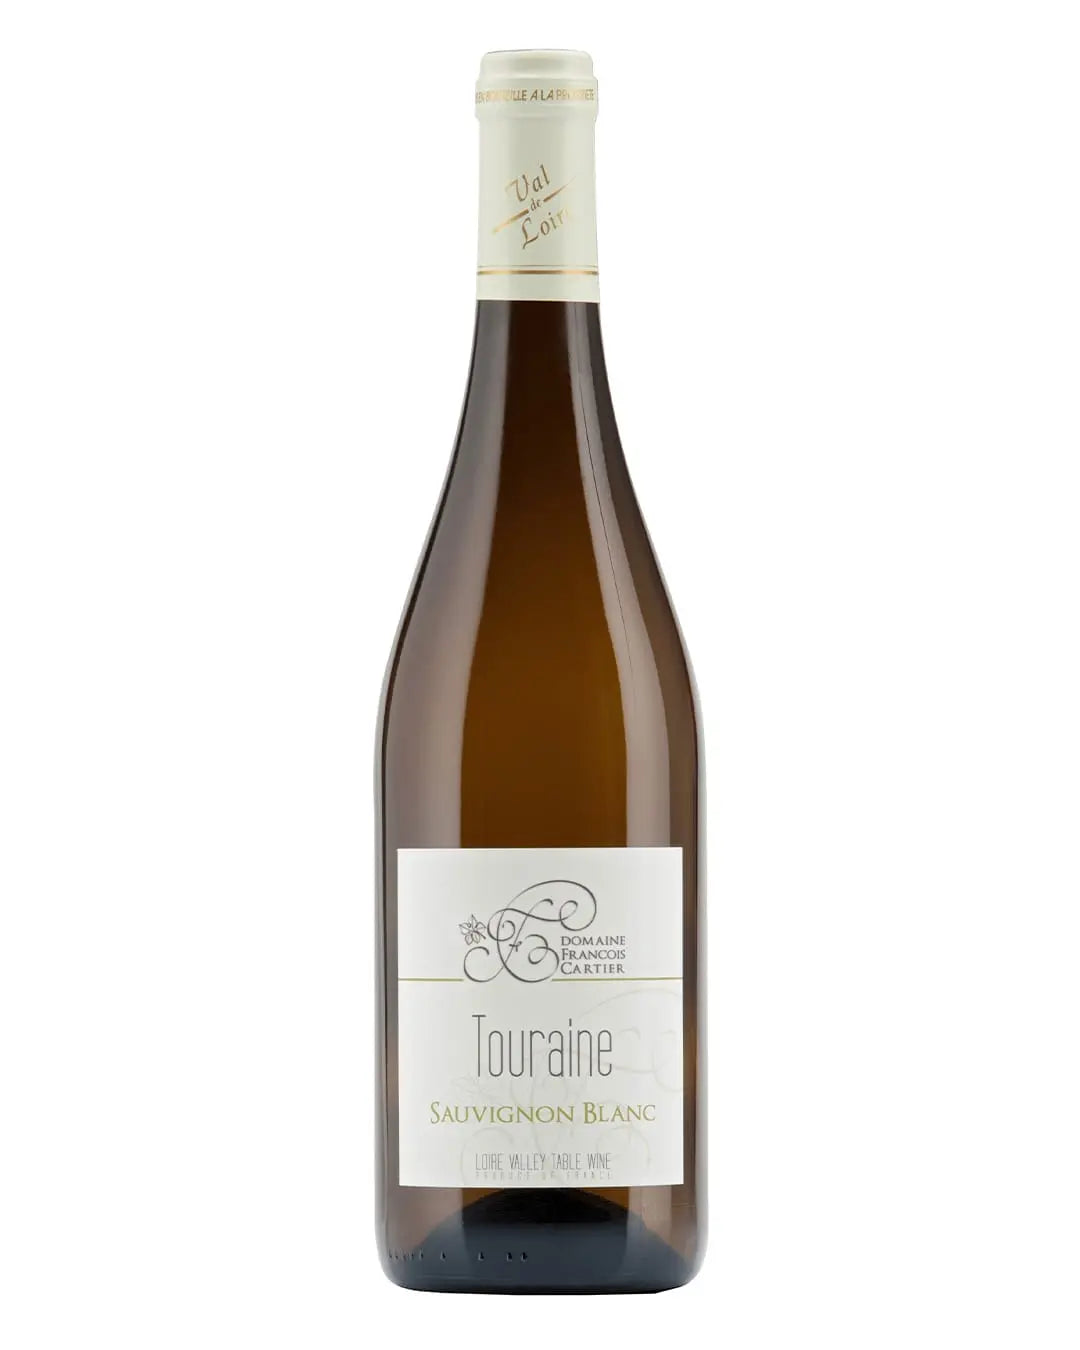 Domaine Francois Cartier Touraine Sauvignon Blanc, 75cl White Wine